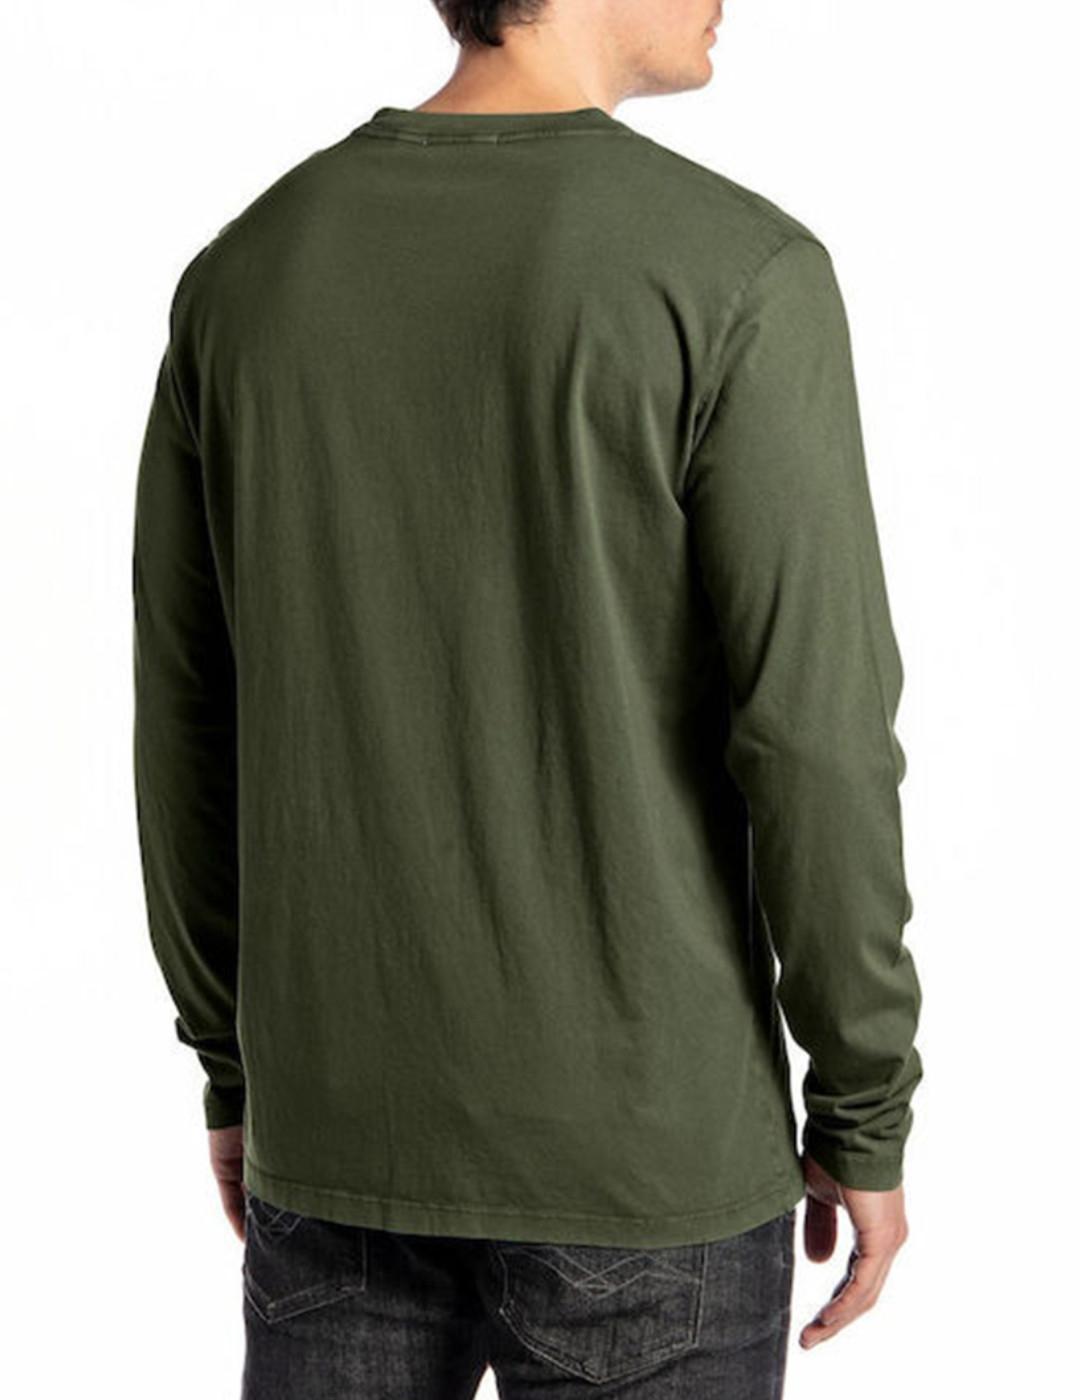 Camiseta Replay verde militar manga larga para hombre